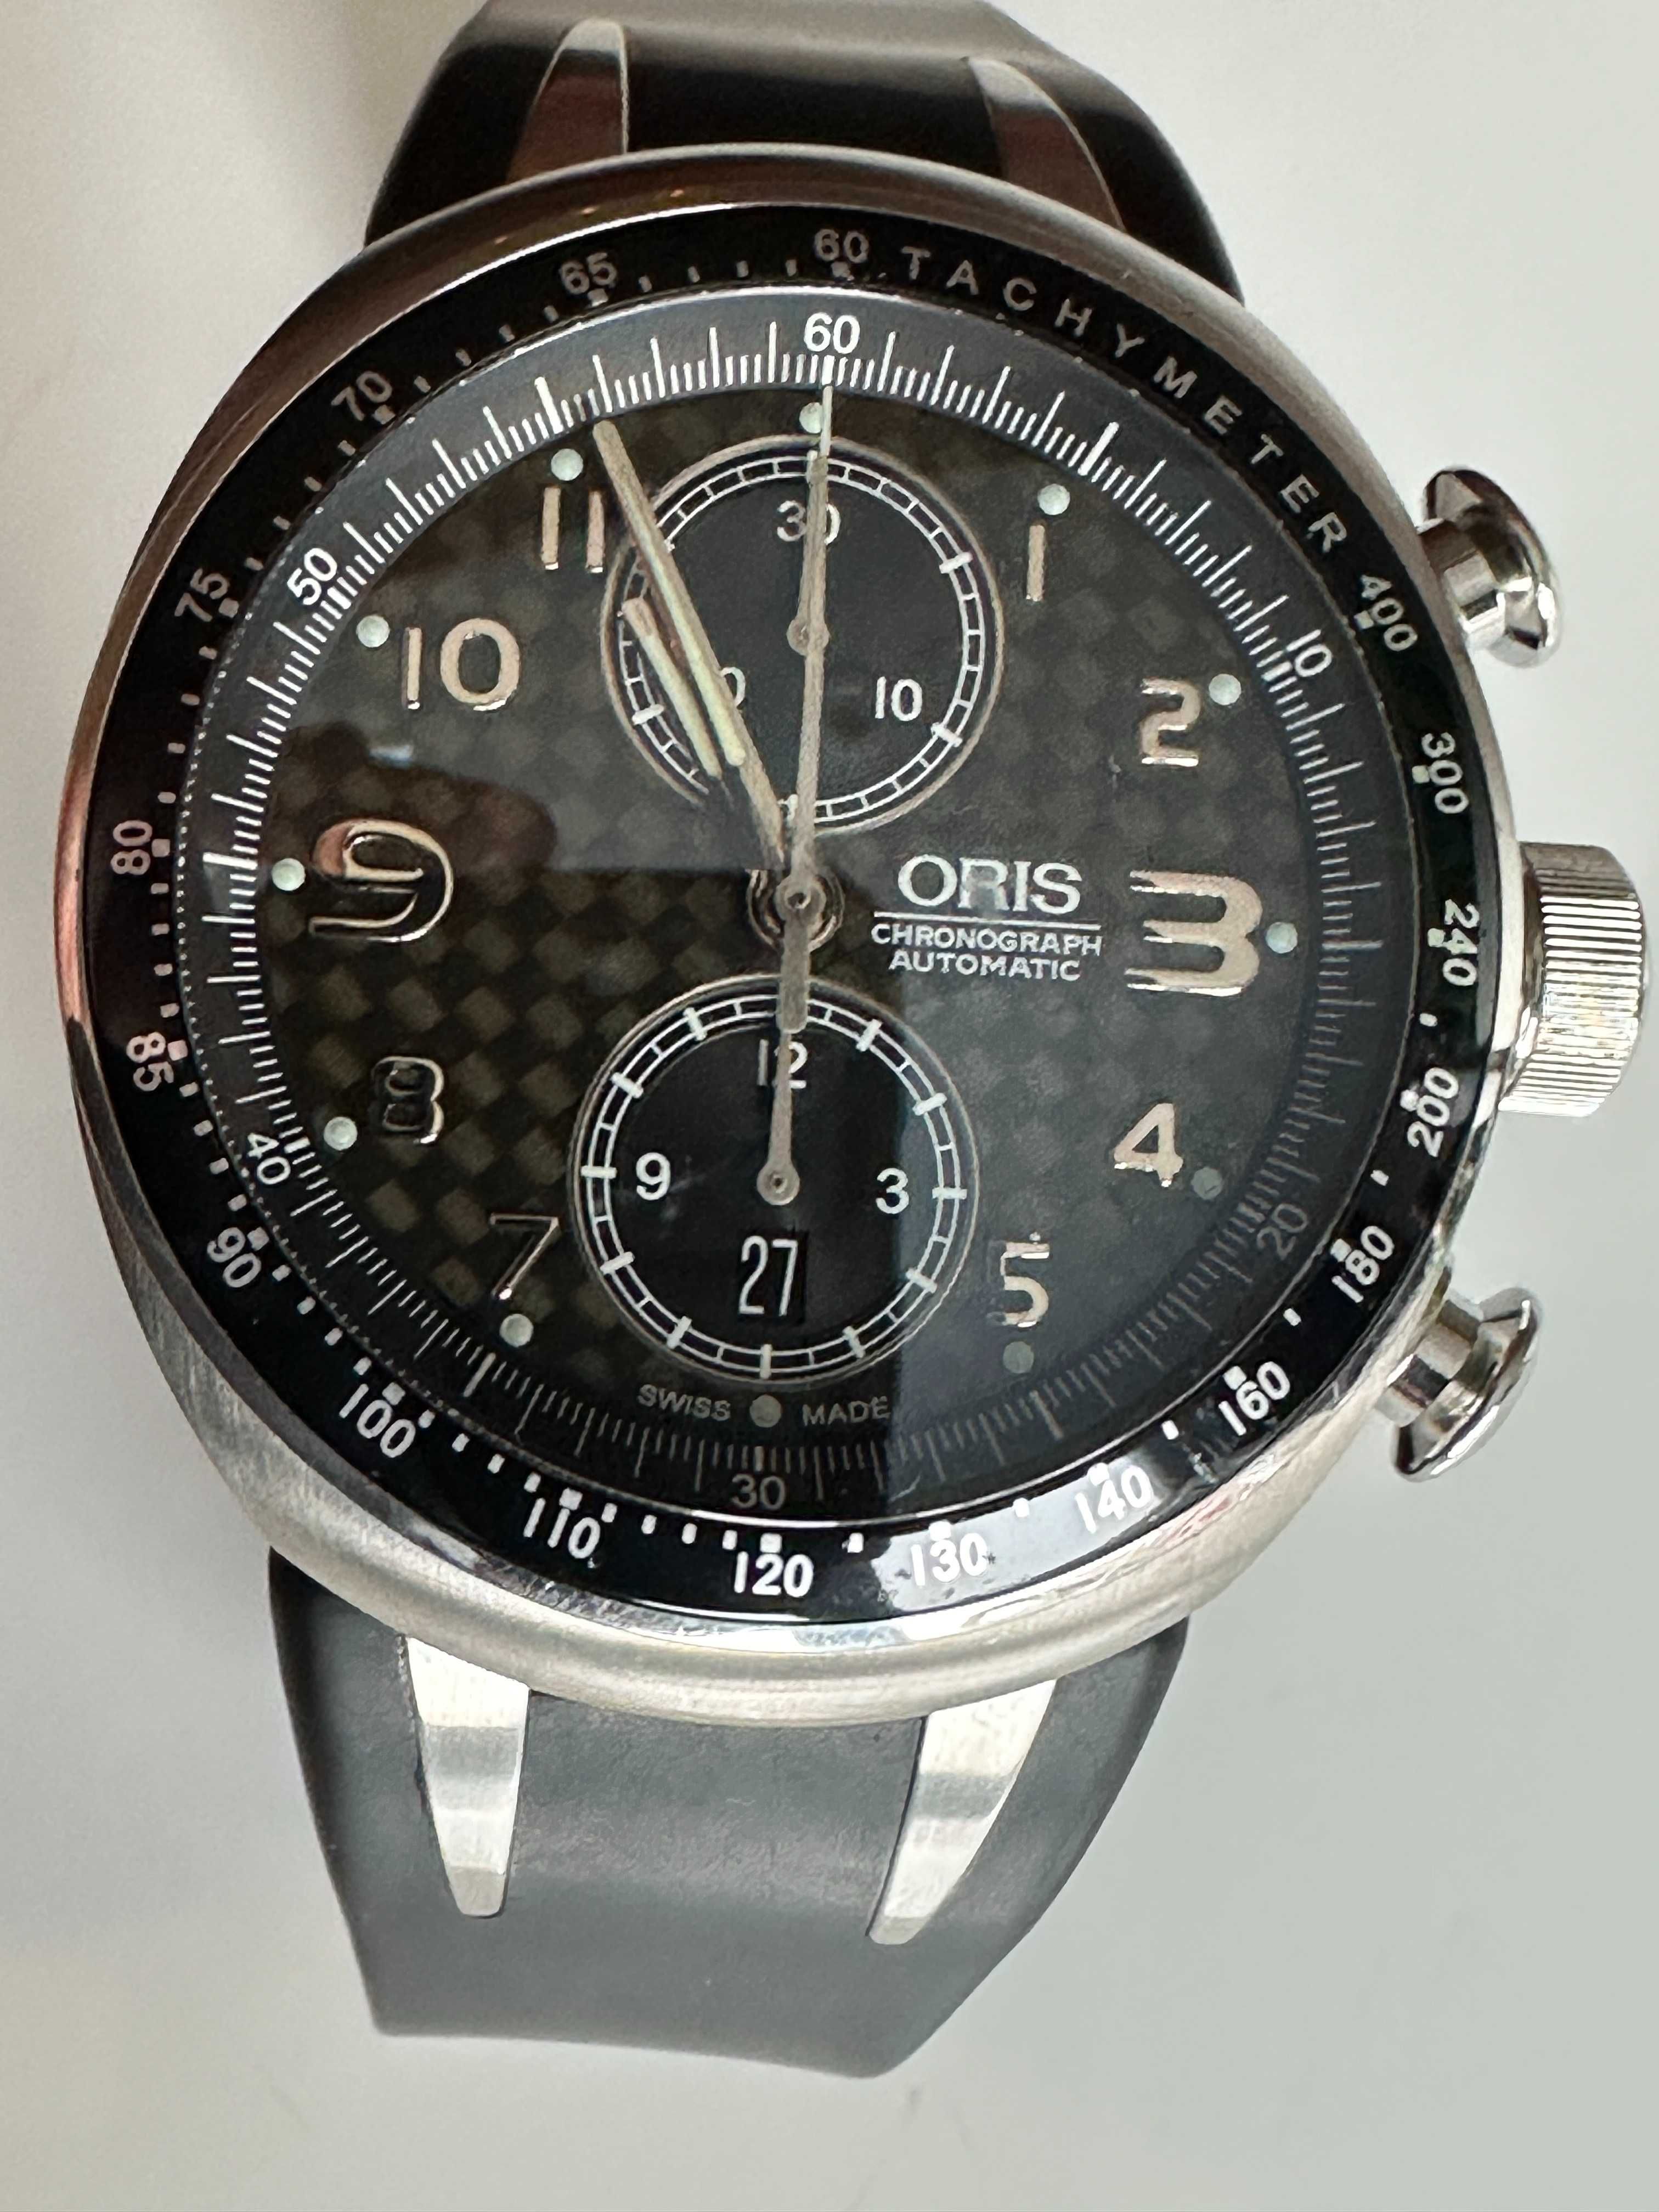 Часовник Oris WilliamsF1 TT3 Chronograph limited edition.